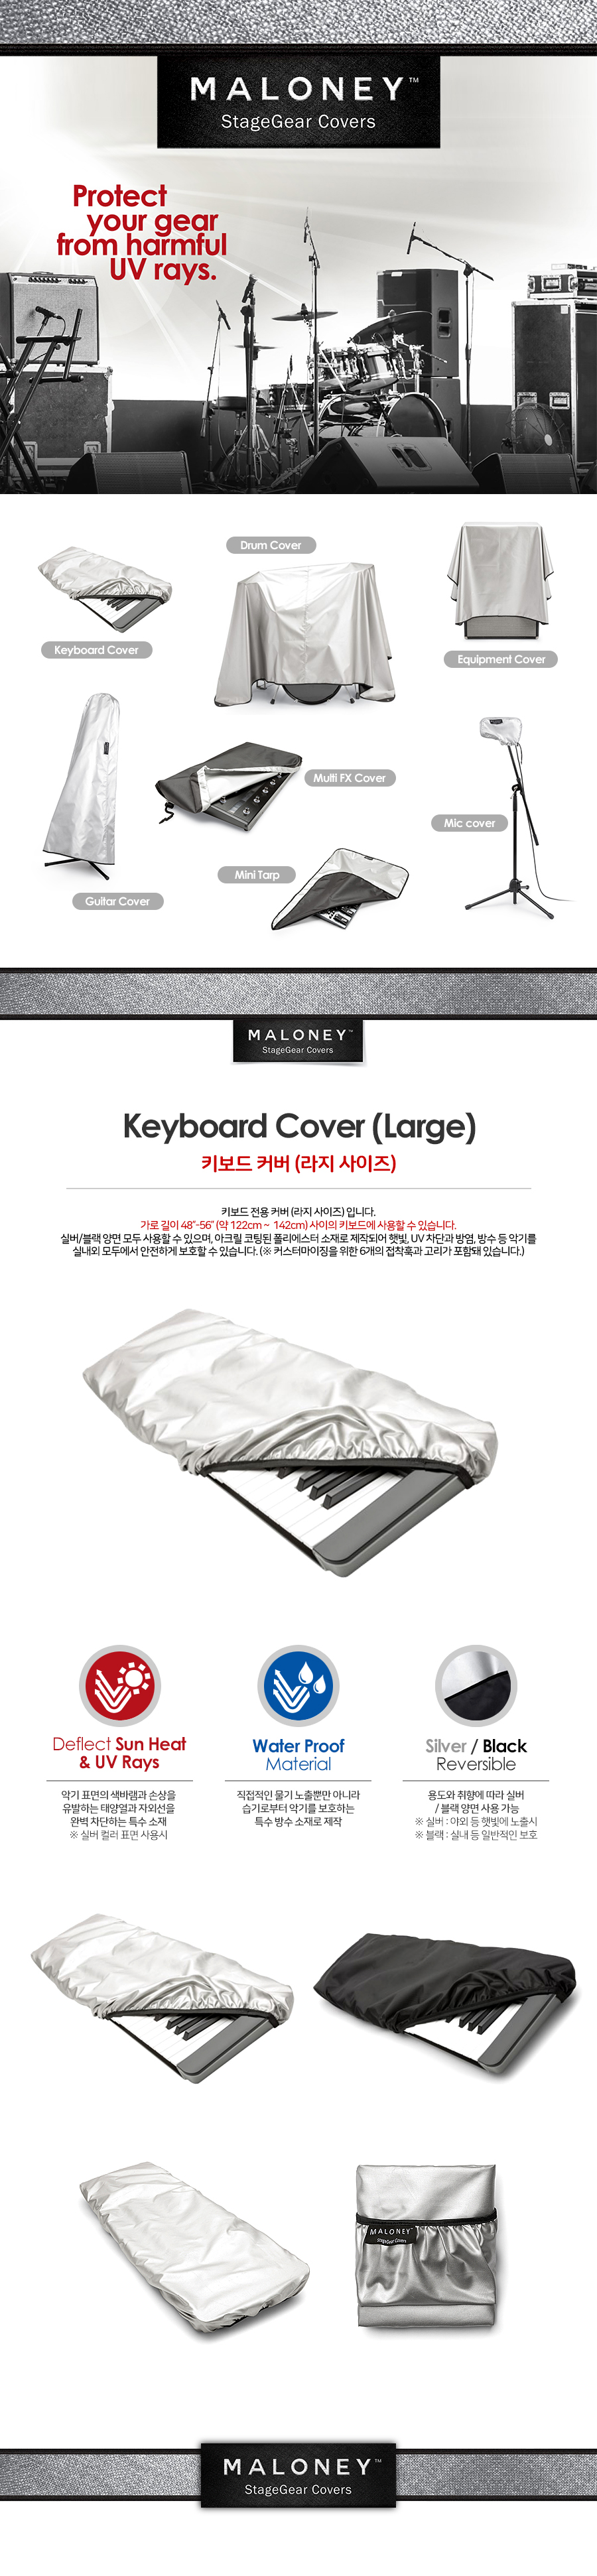 Maloney_Keyboard_Cover_Large_D.jpg